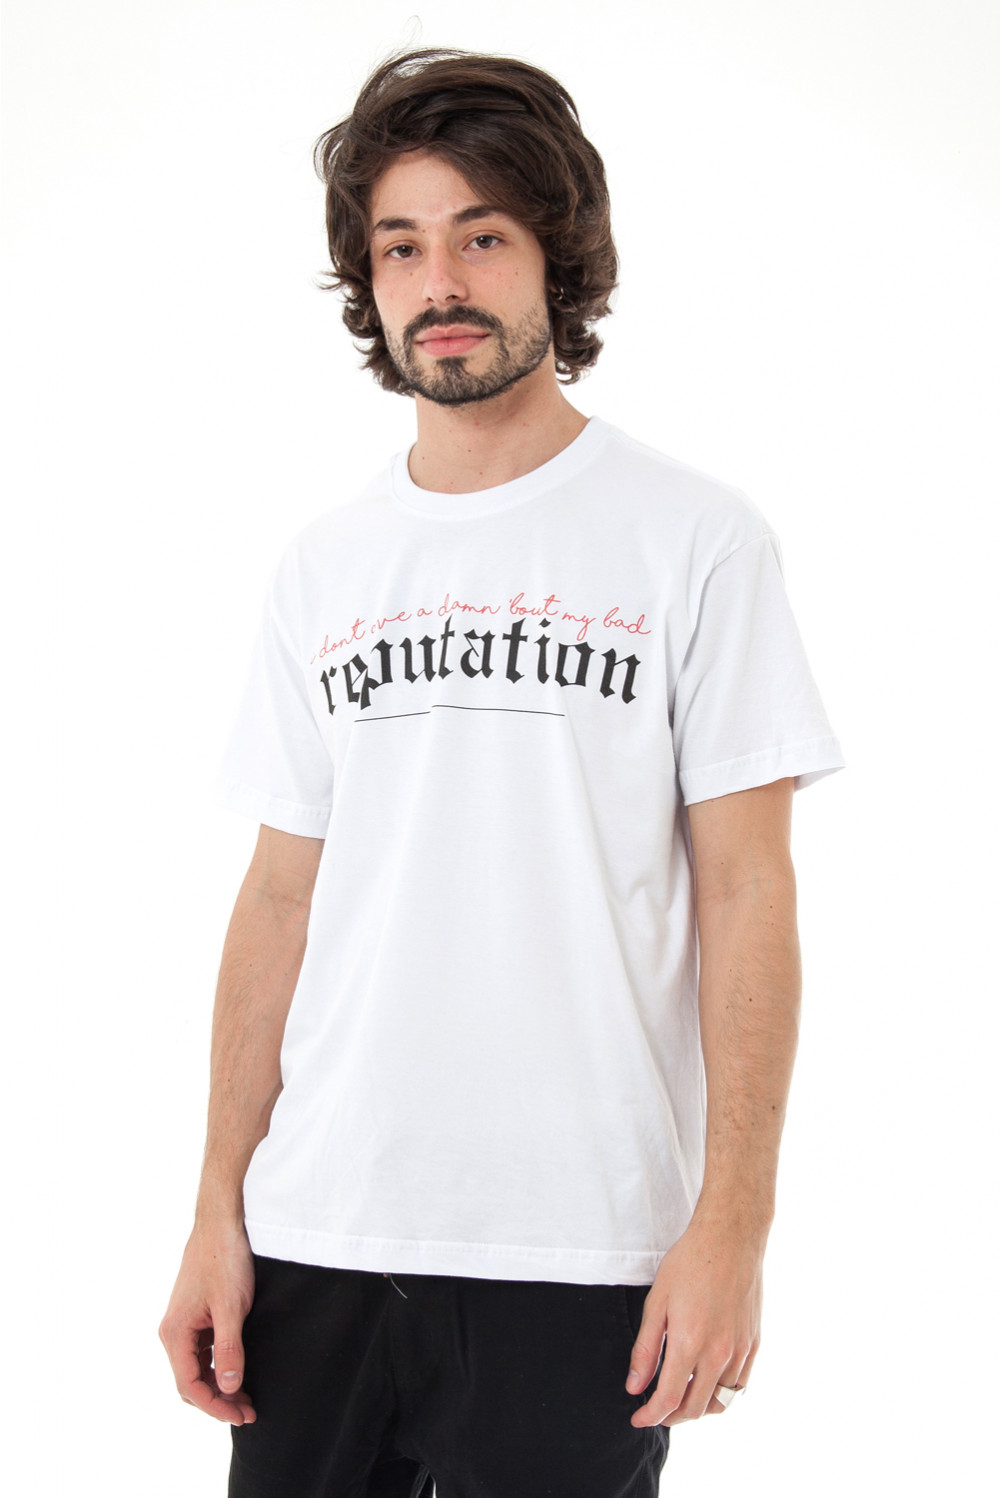 Camiseta Korova Reputation Branca